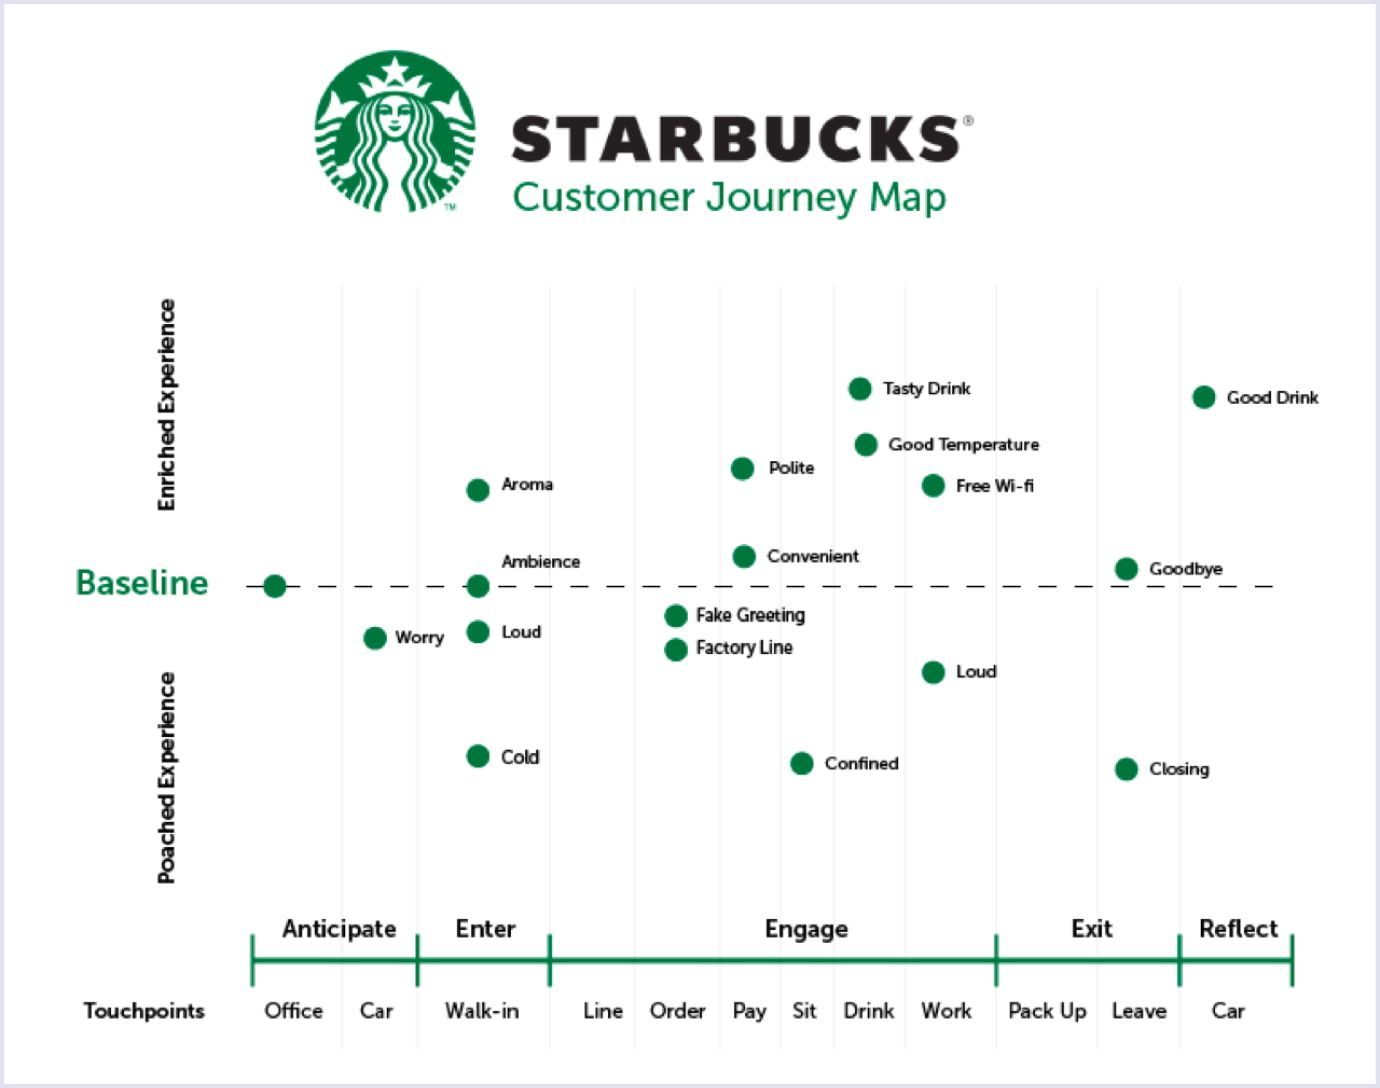 Customer journey map example: Starbucks